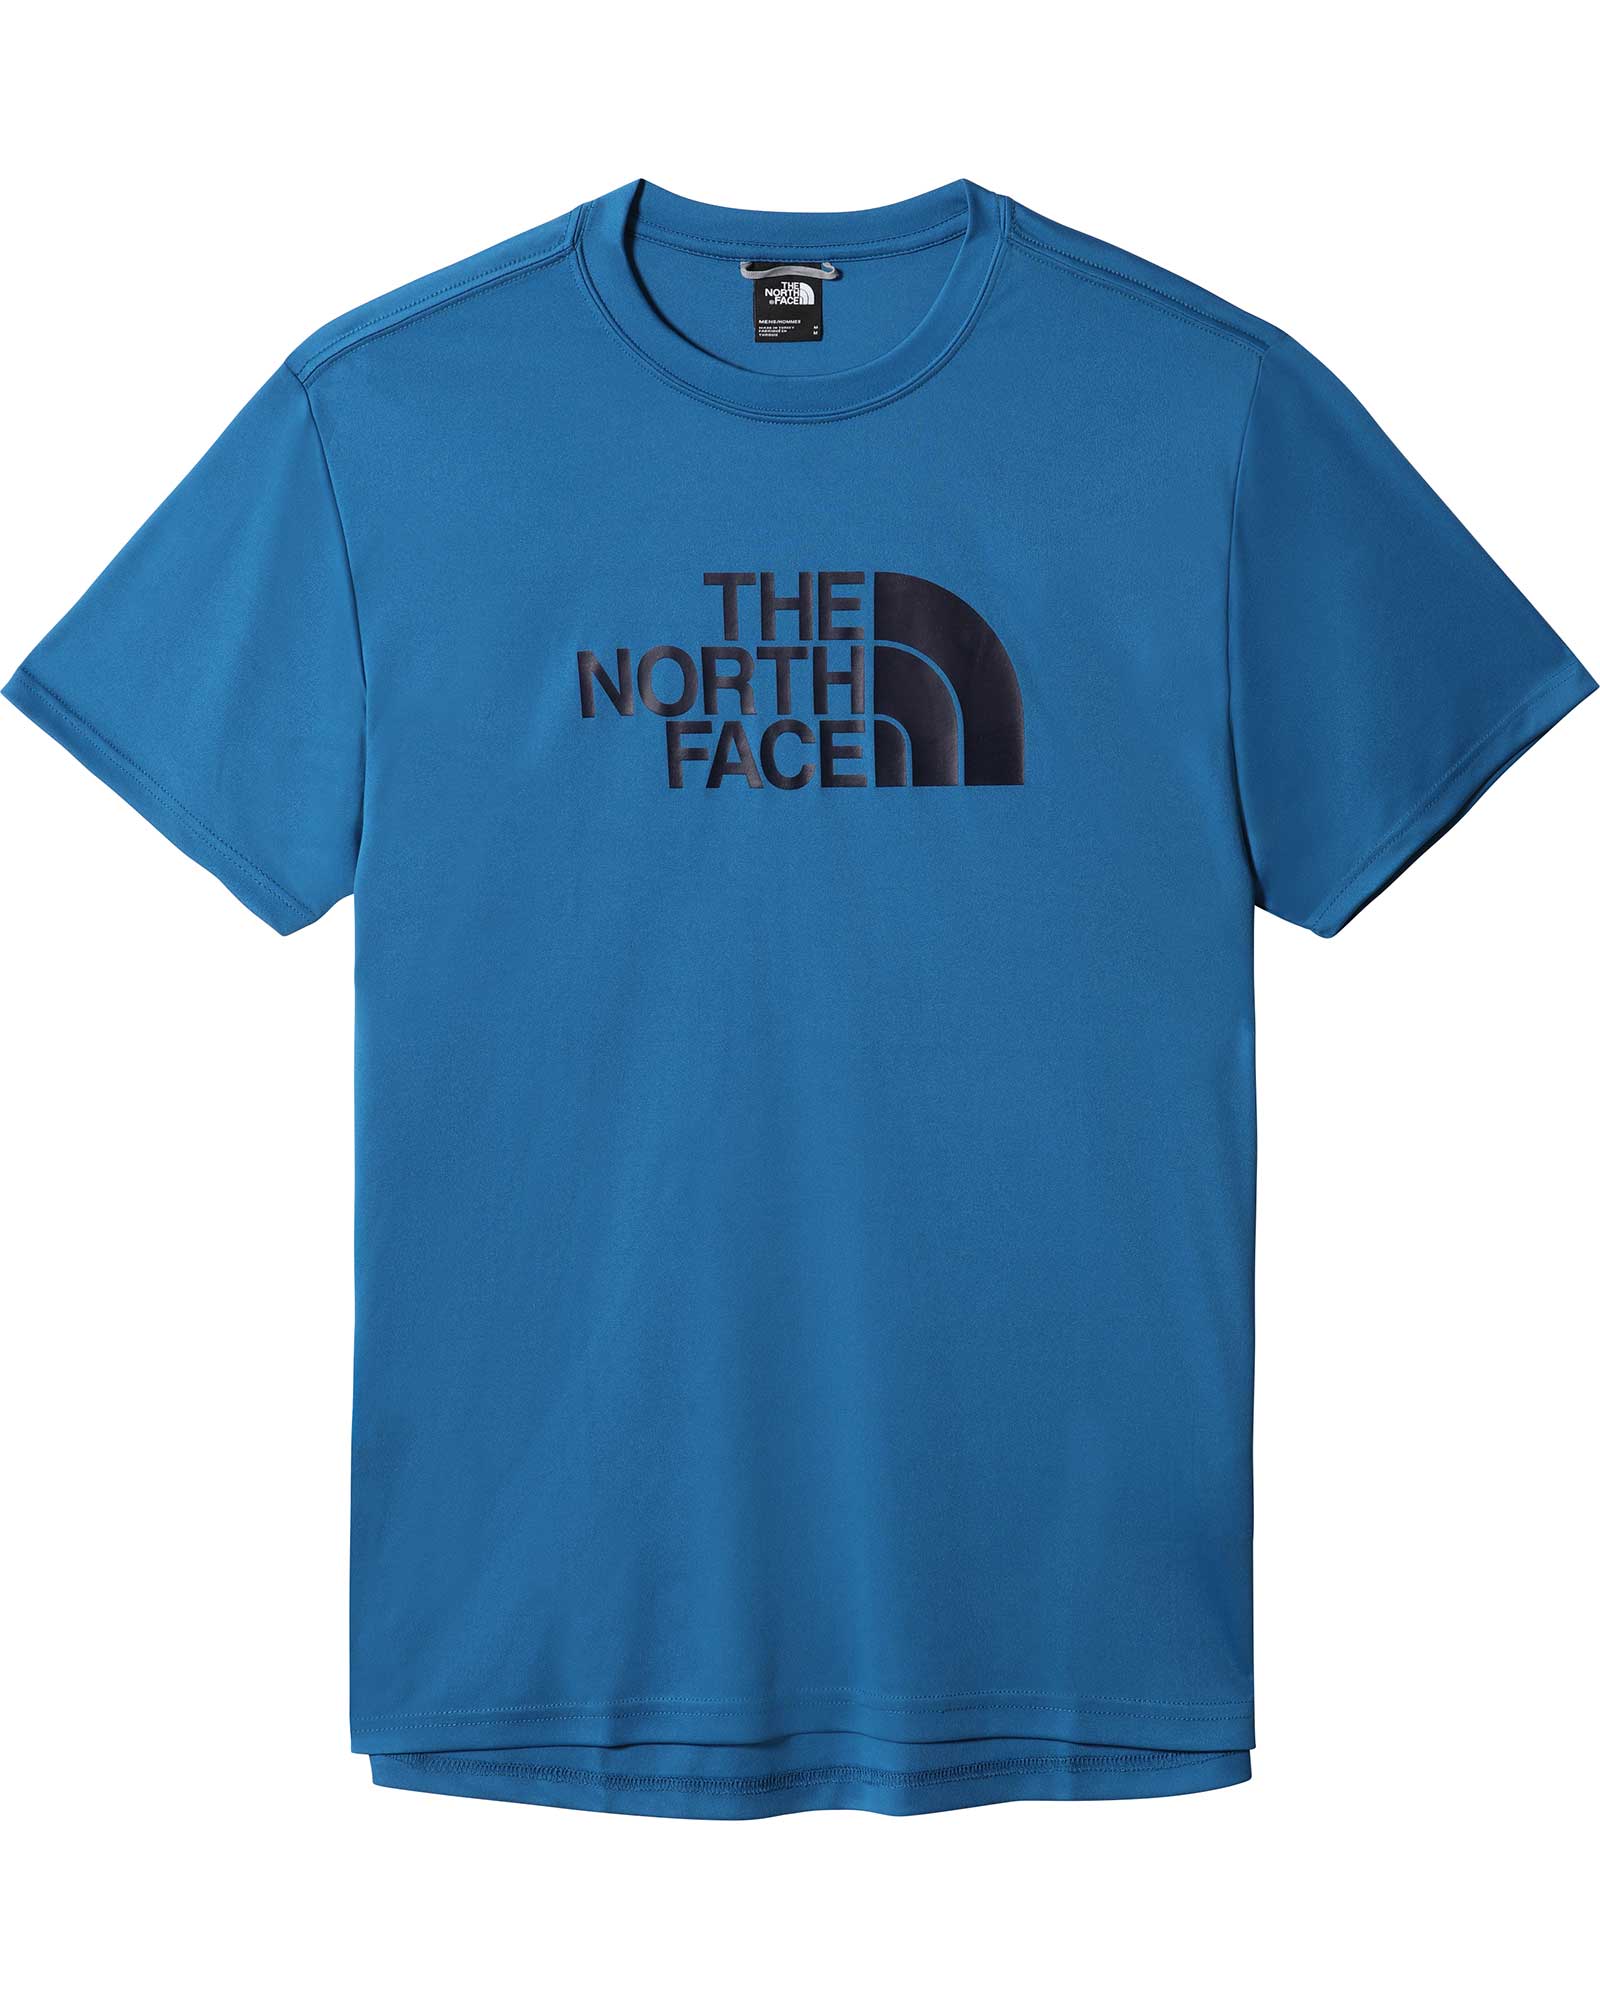 The North Face Reaxion Easy Men’s T Shirt - Banff Blue L